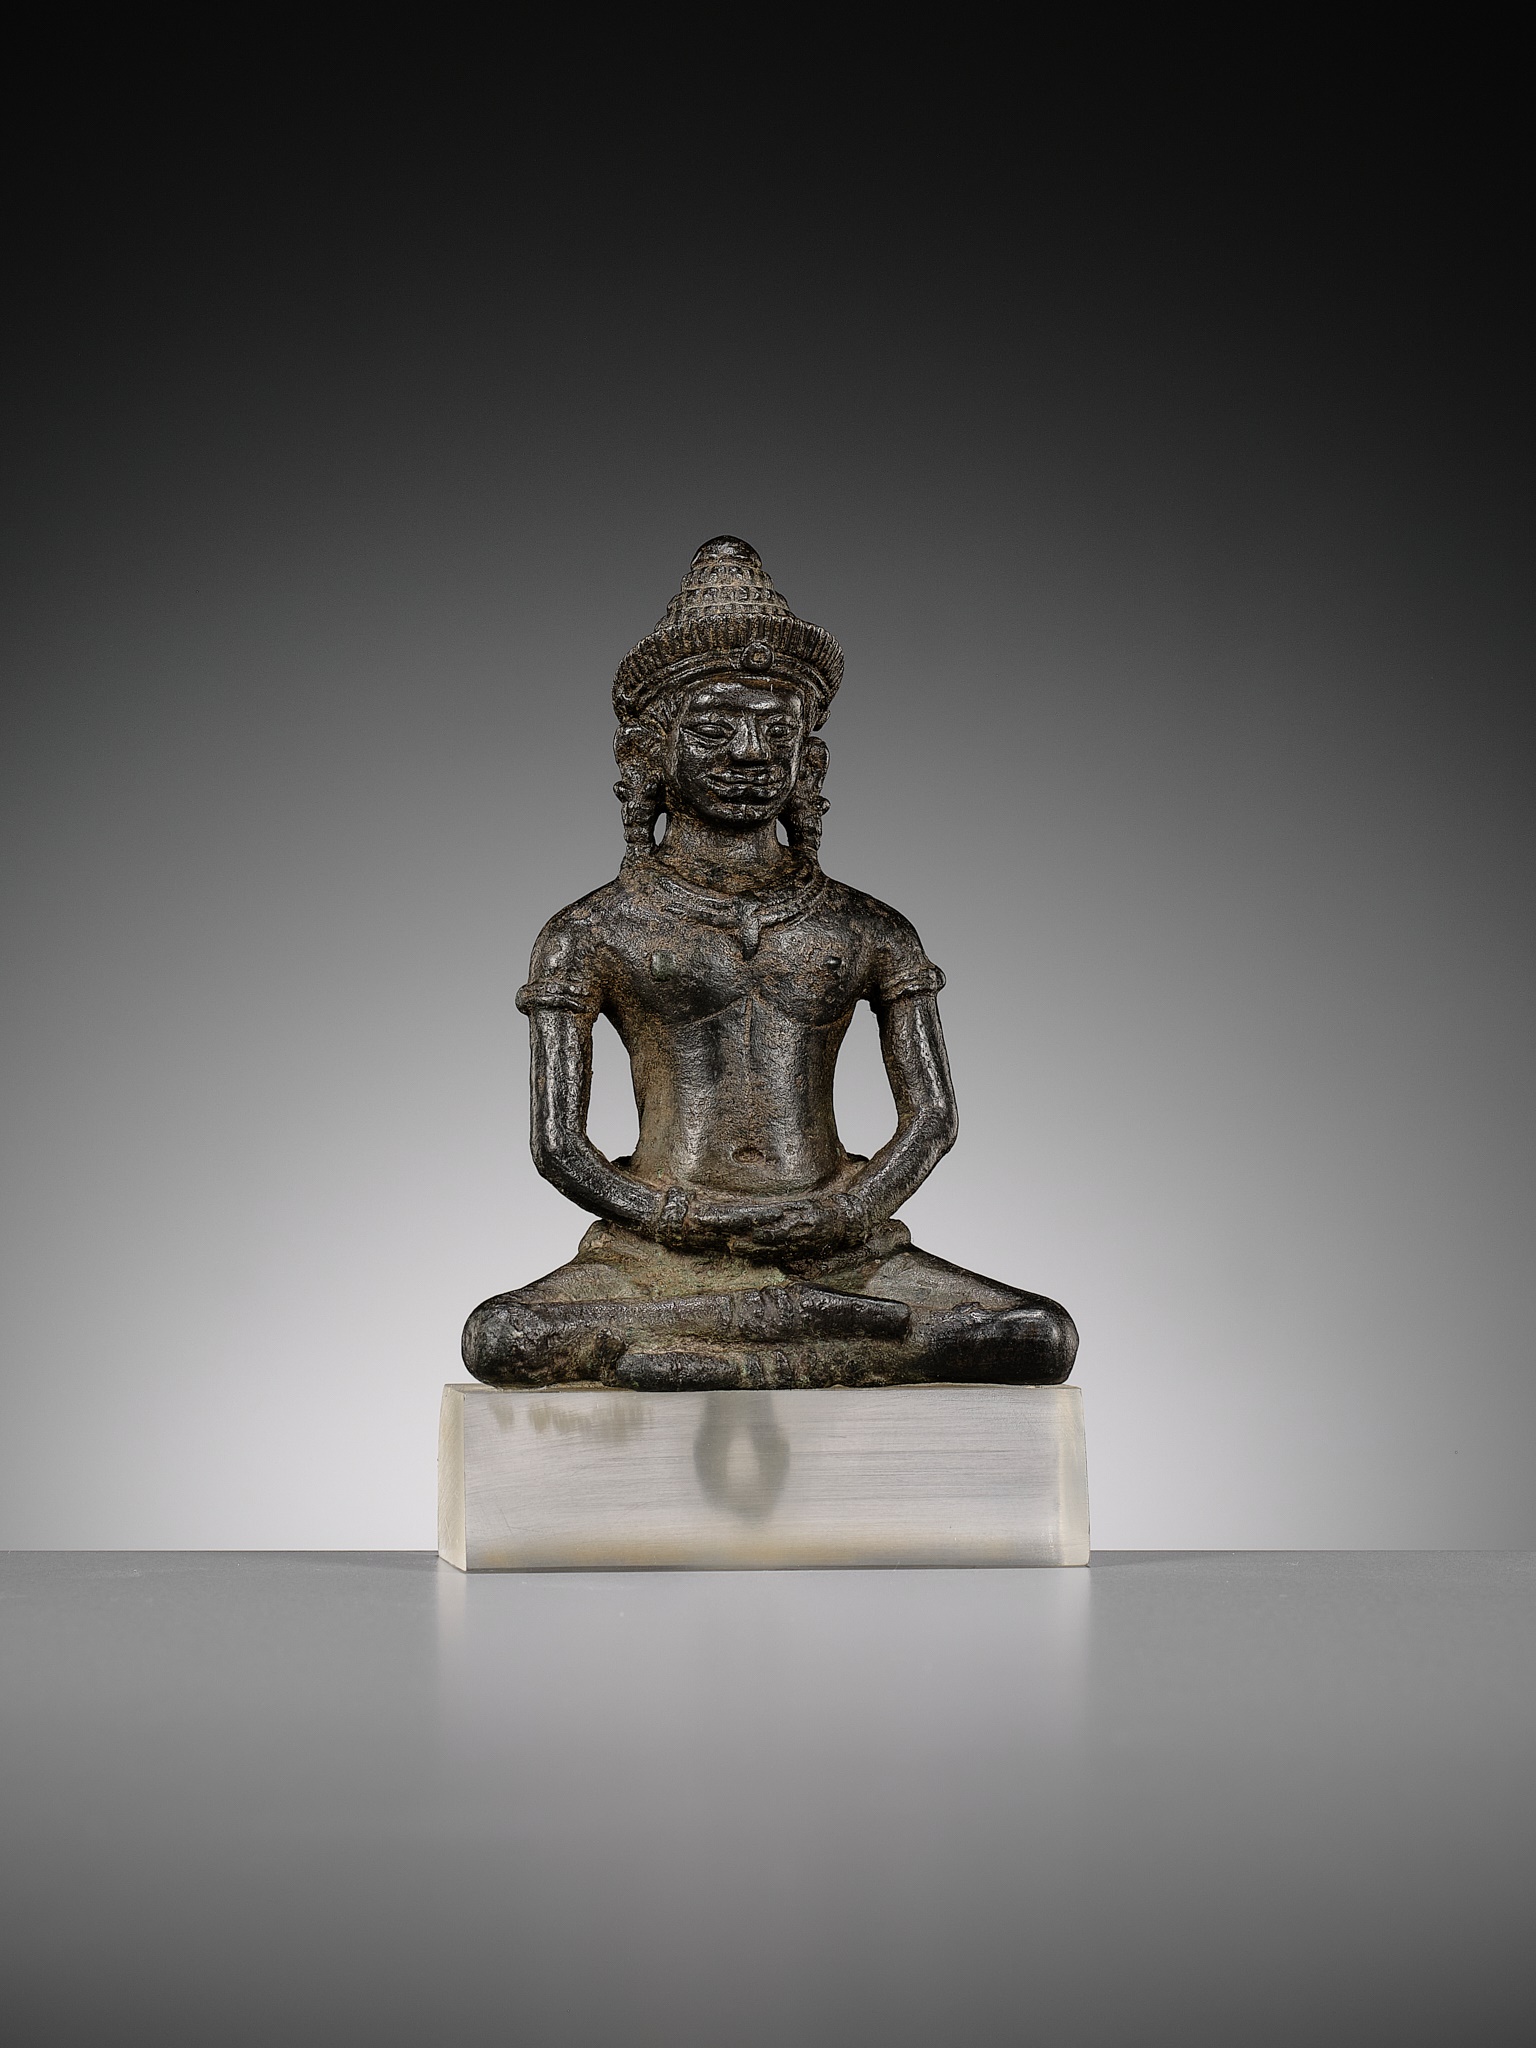 A BRONZE FIGURE OF BUDDHA, ANGKOR PERIOD, KHMER EMPIRE, 12TH CENTURY - Image 9 of 9